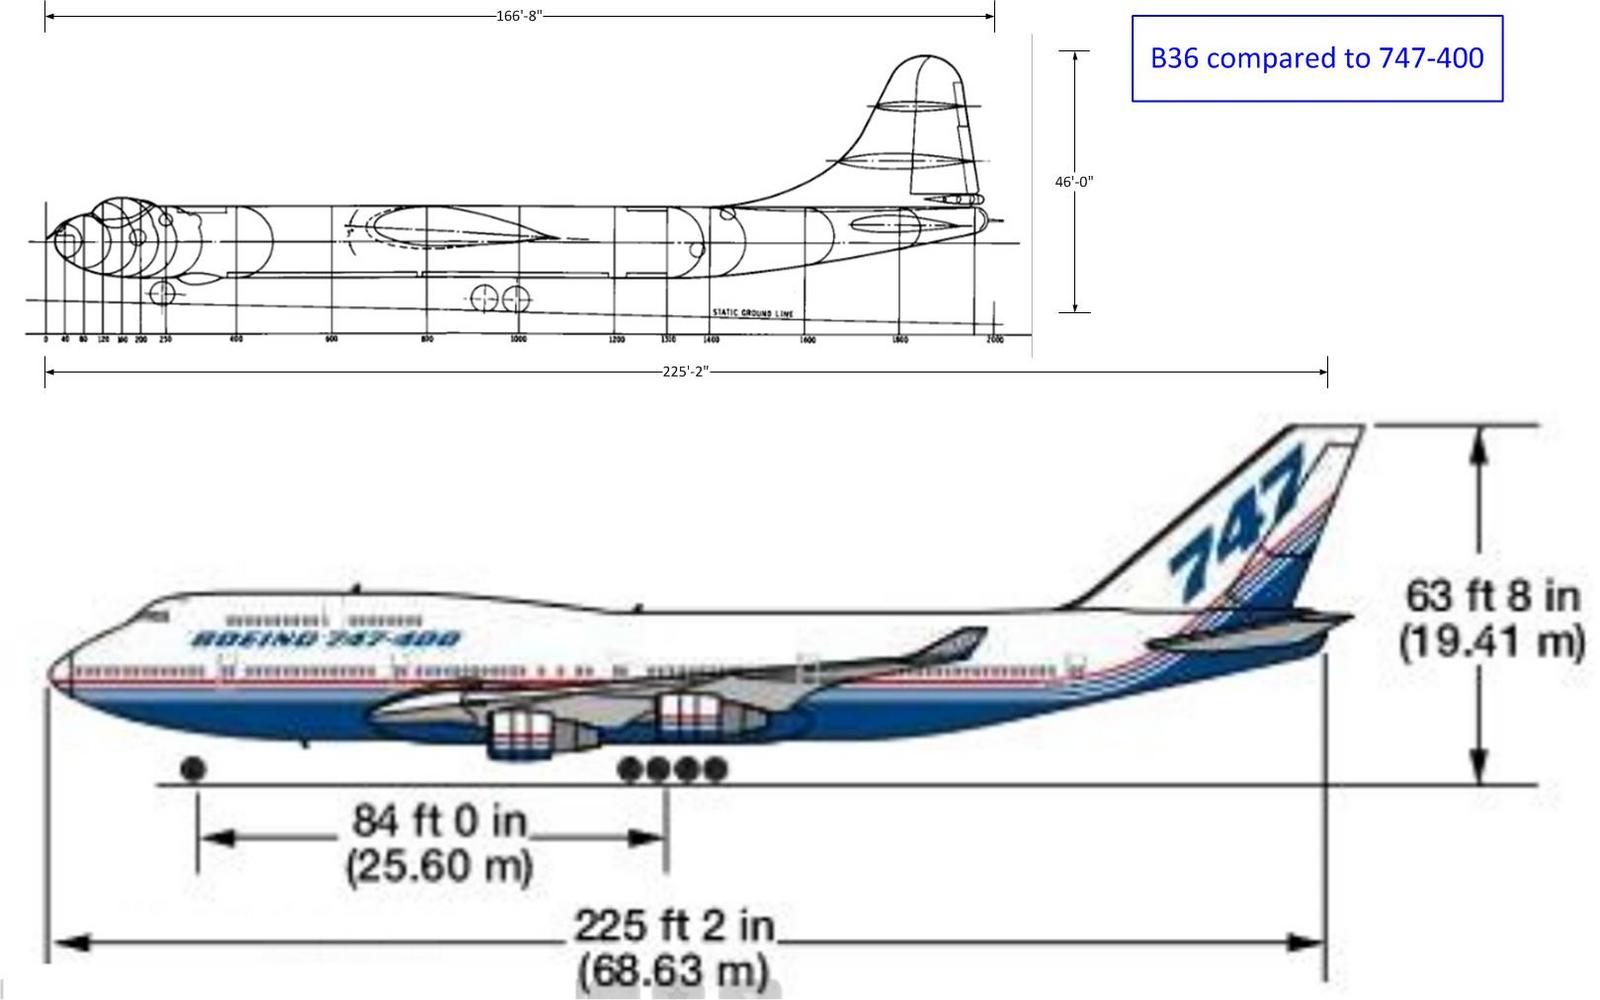 B36 vs 747-400 (747 is much bigger). 